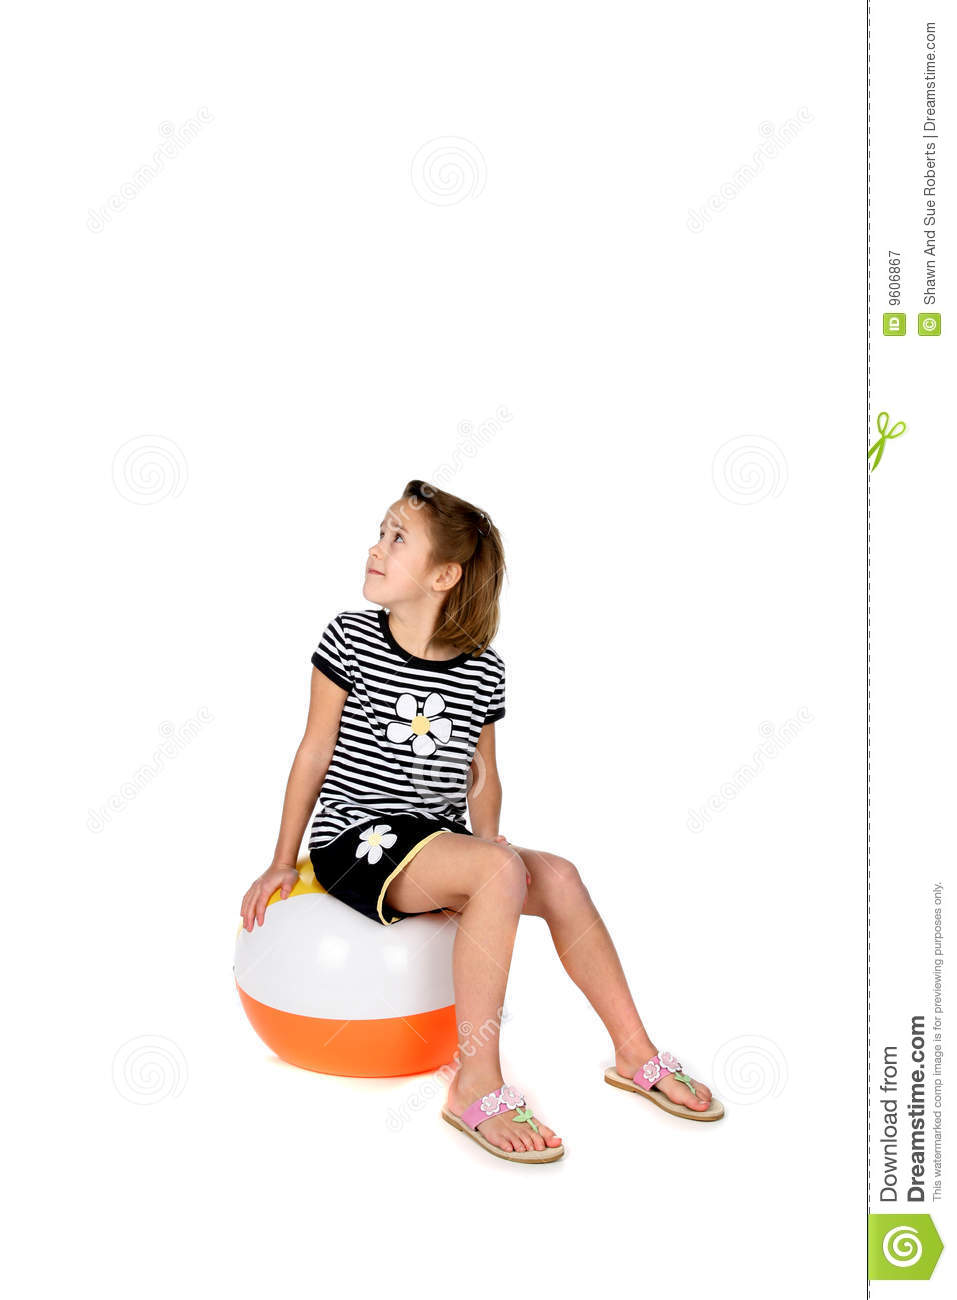 Image Girl Sitting On Beach Ball